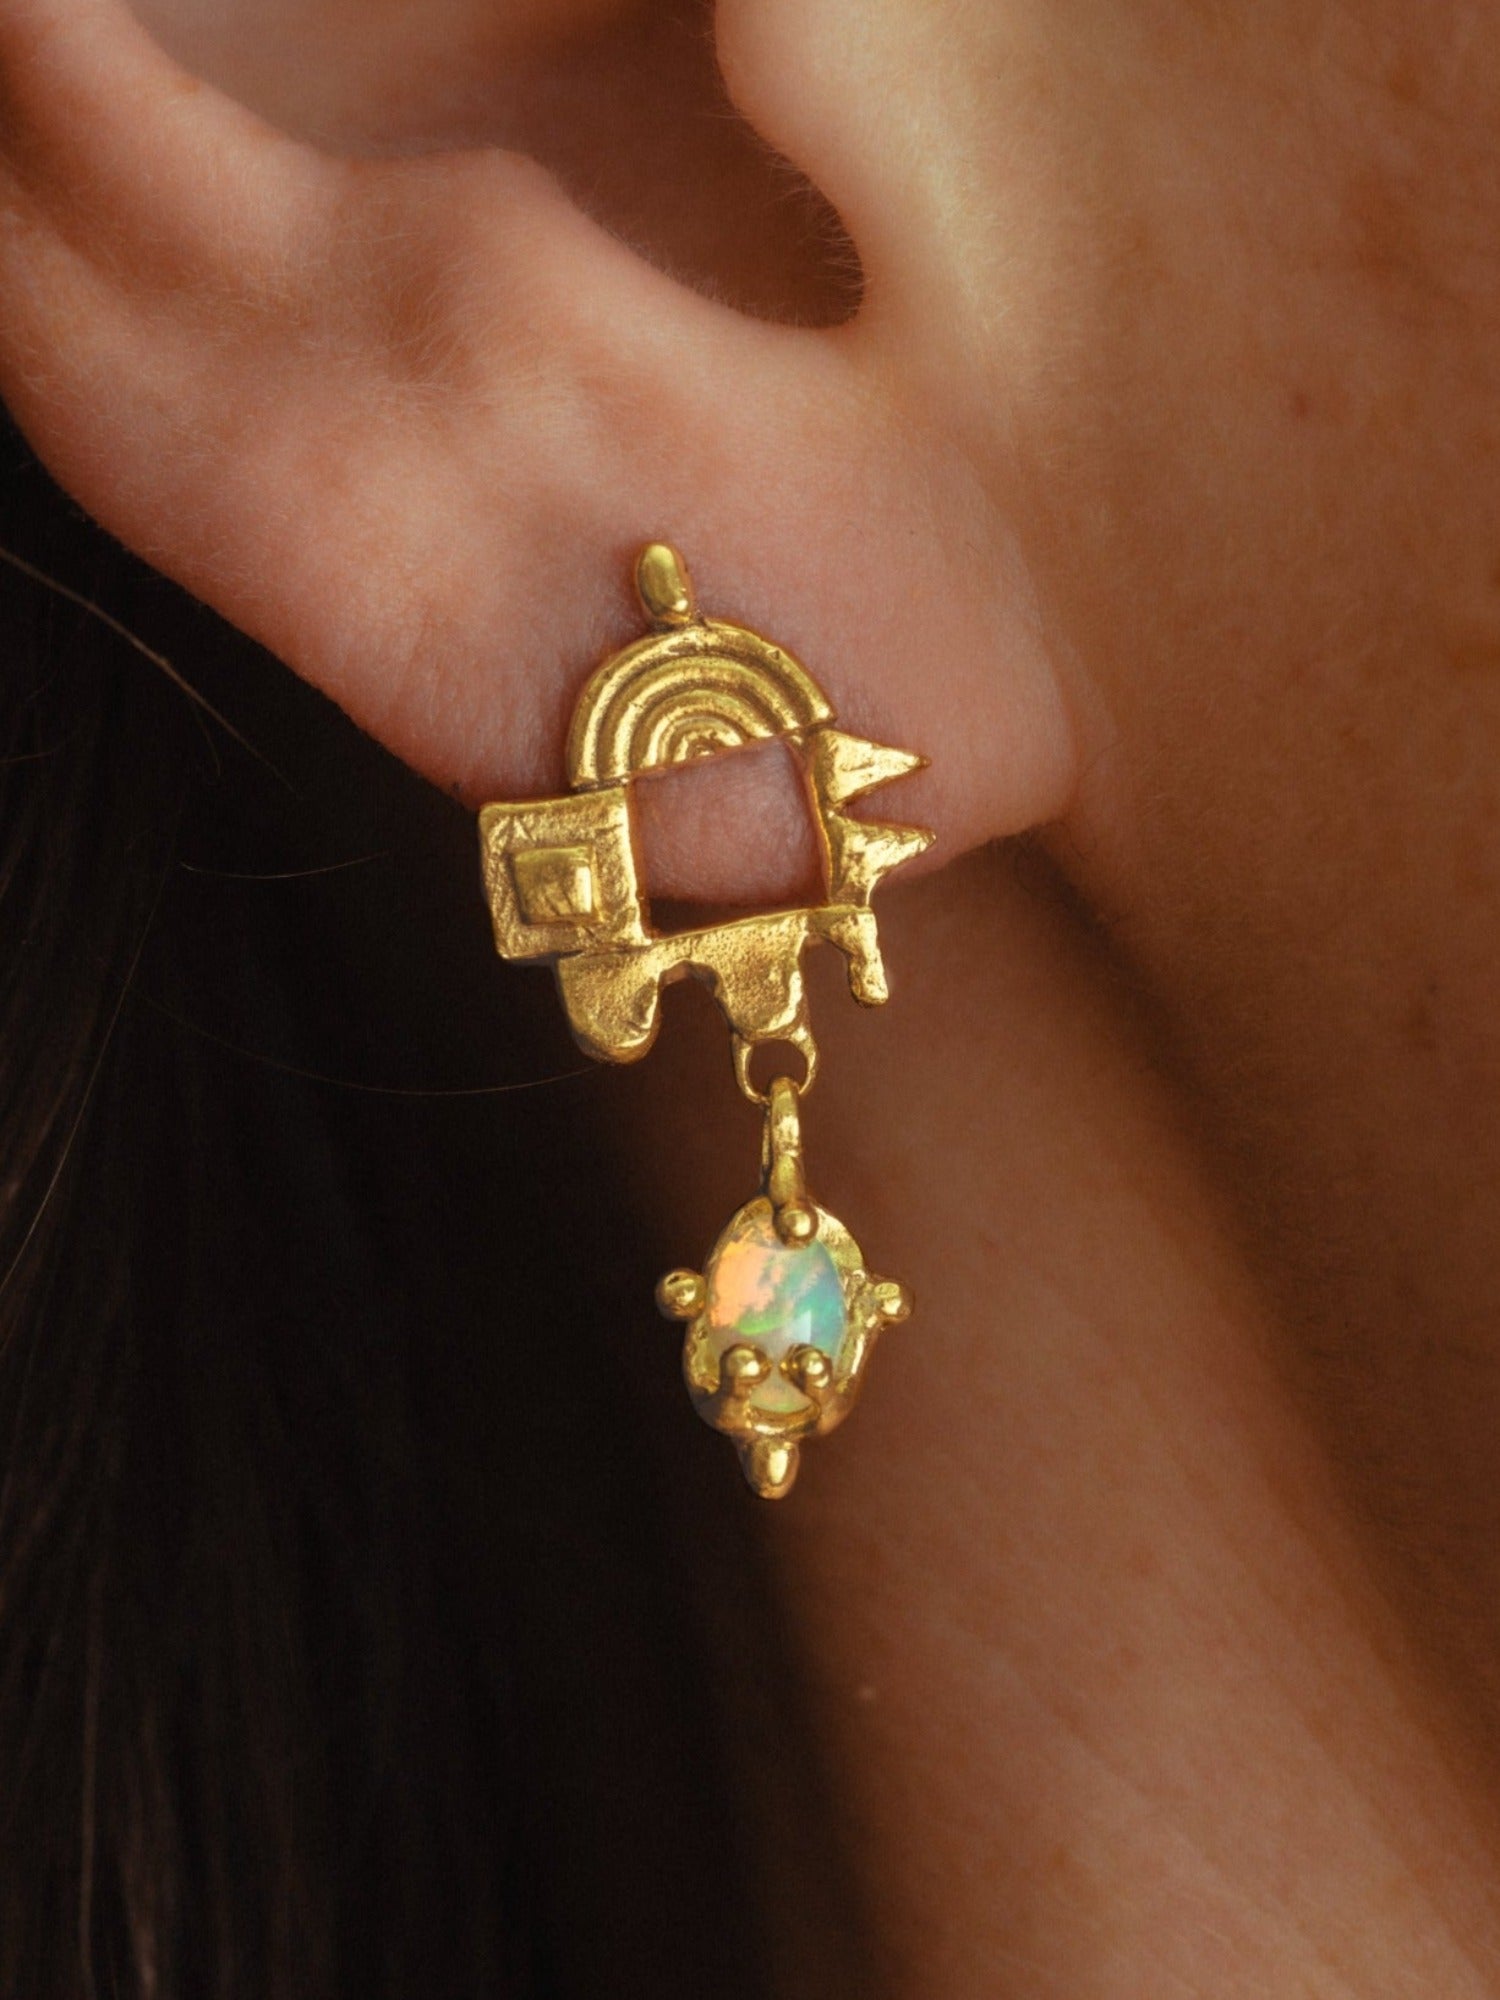 The Elephants Trick Earrings (pair)